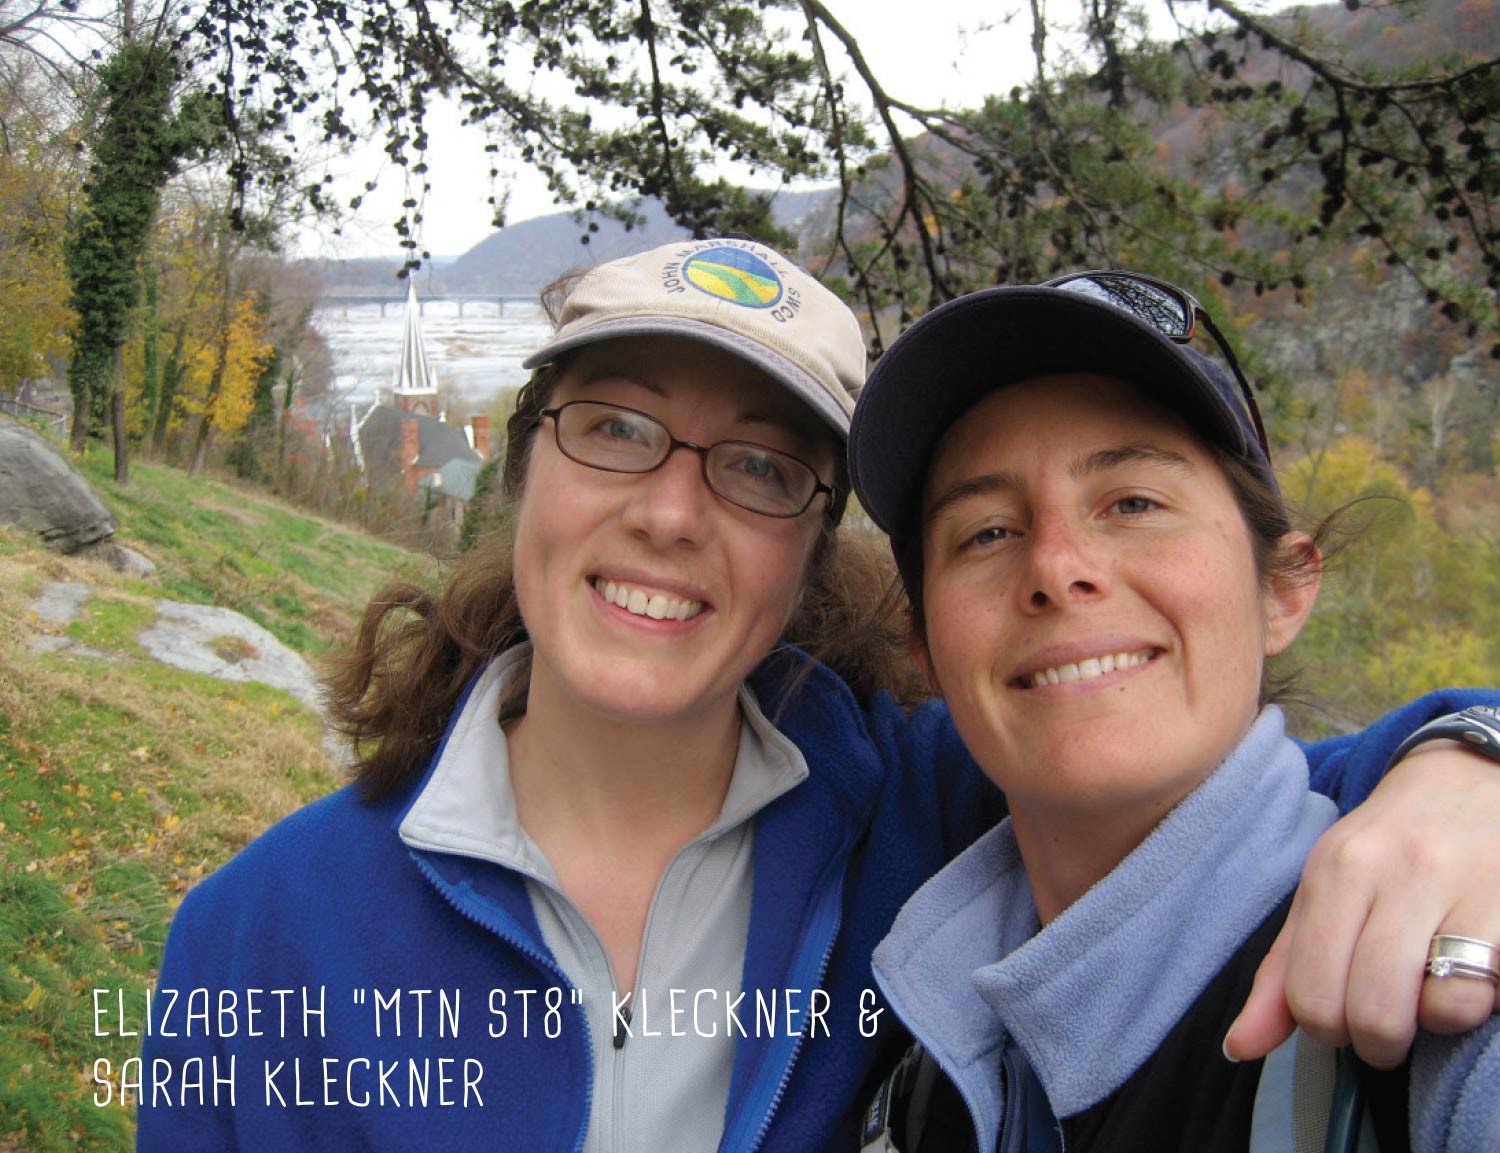 Elizabeth “MTN ST8” Kleckner & Sarah Kleckner 